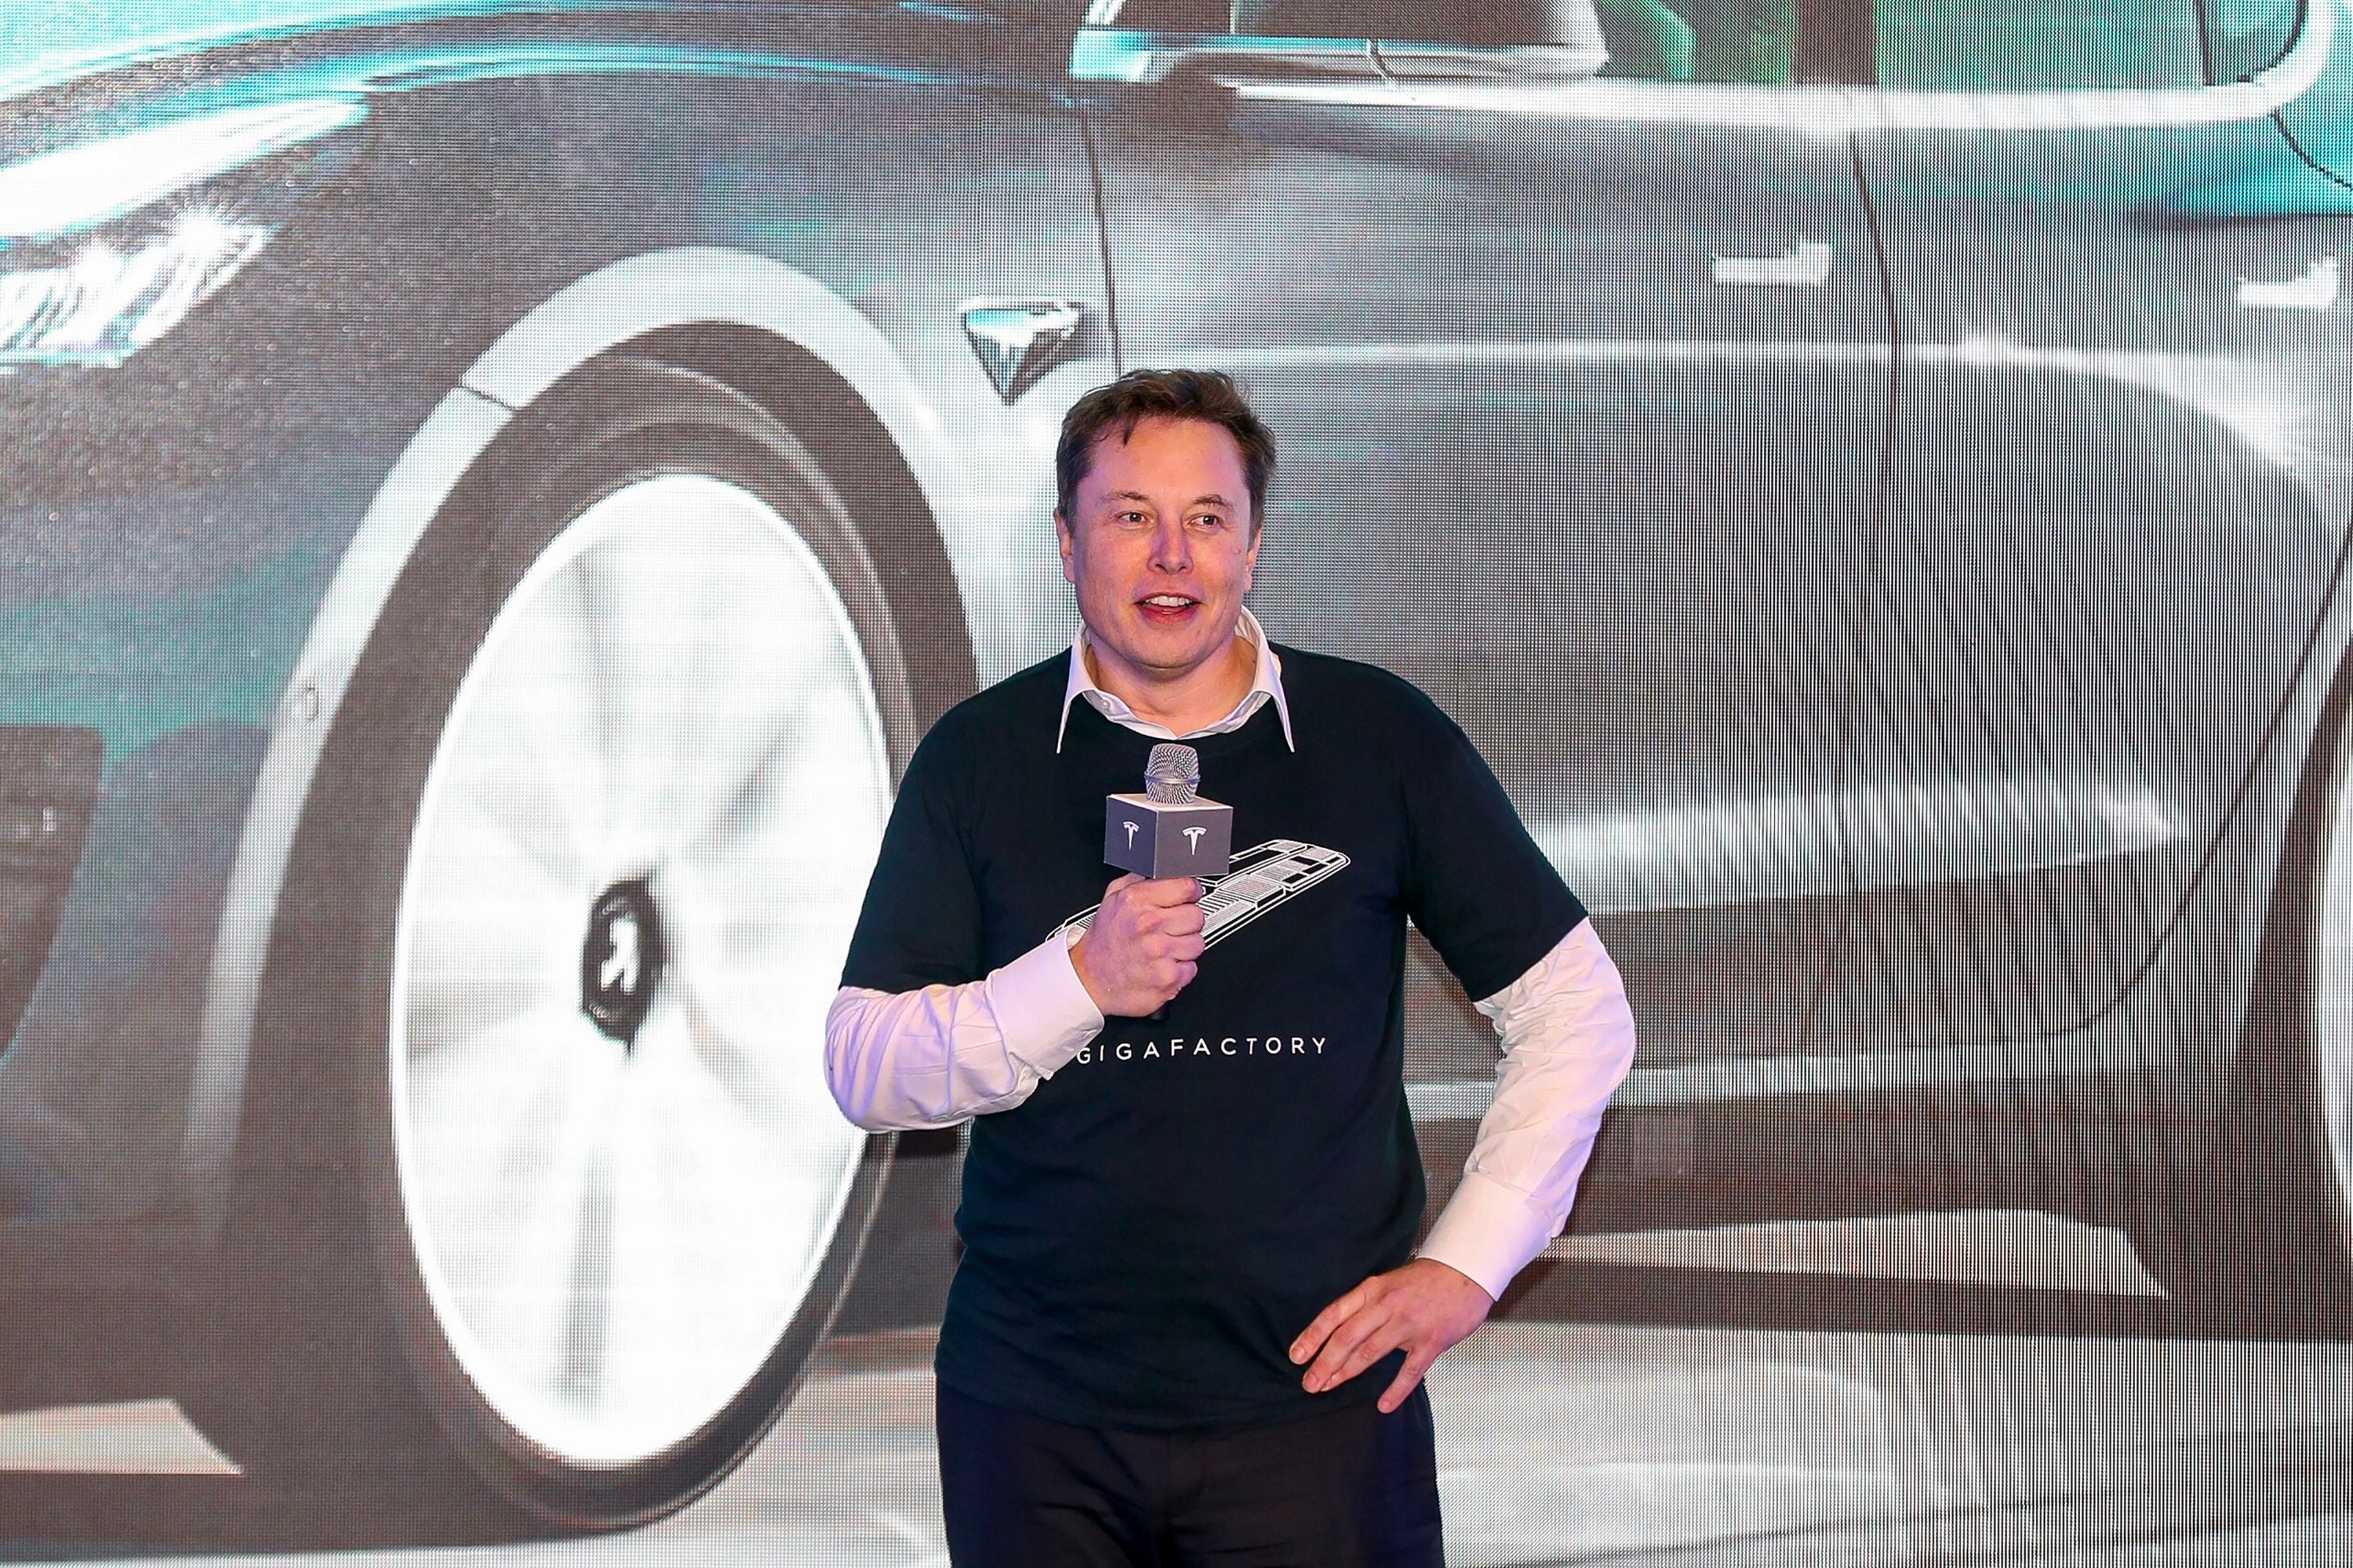 Elon Musk’s Tesla faces backlash for opening showroom in Xinjiang